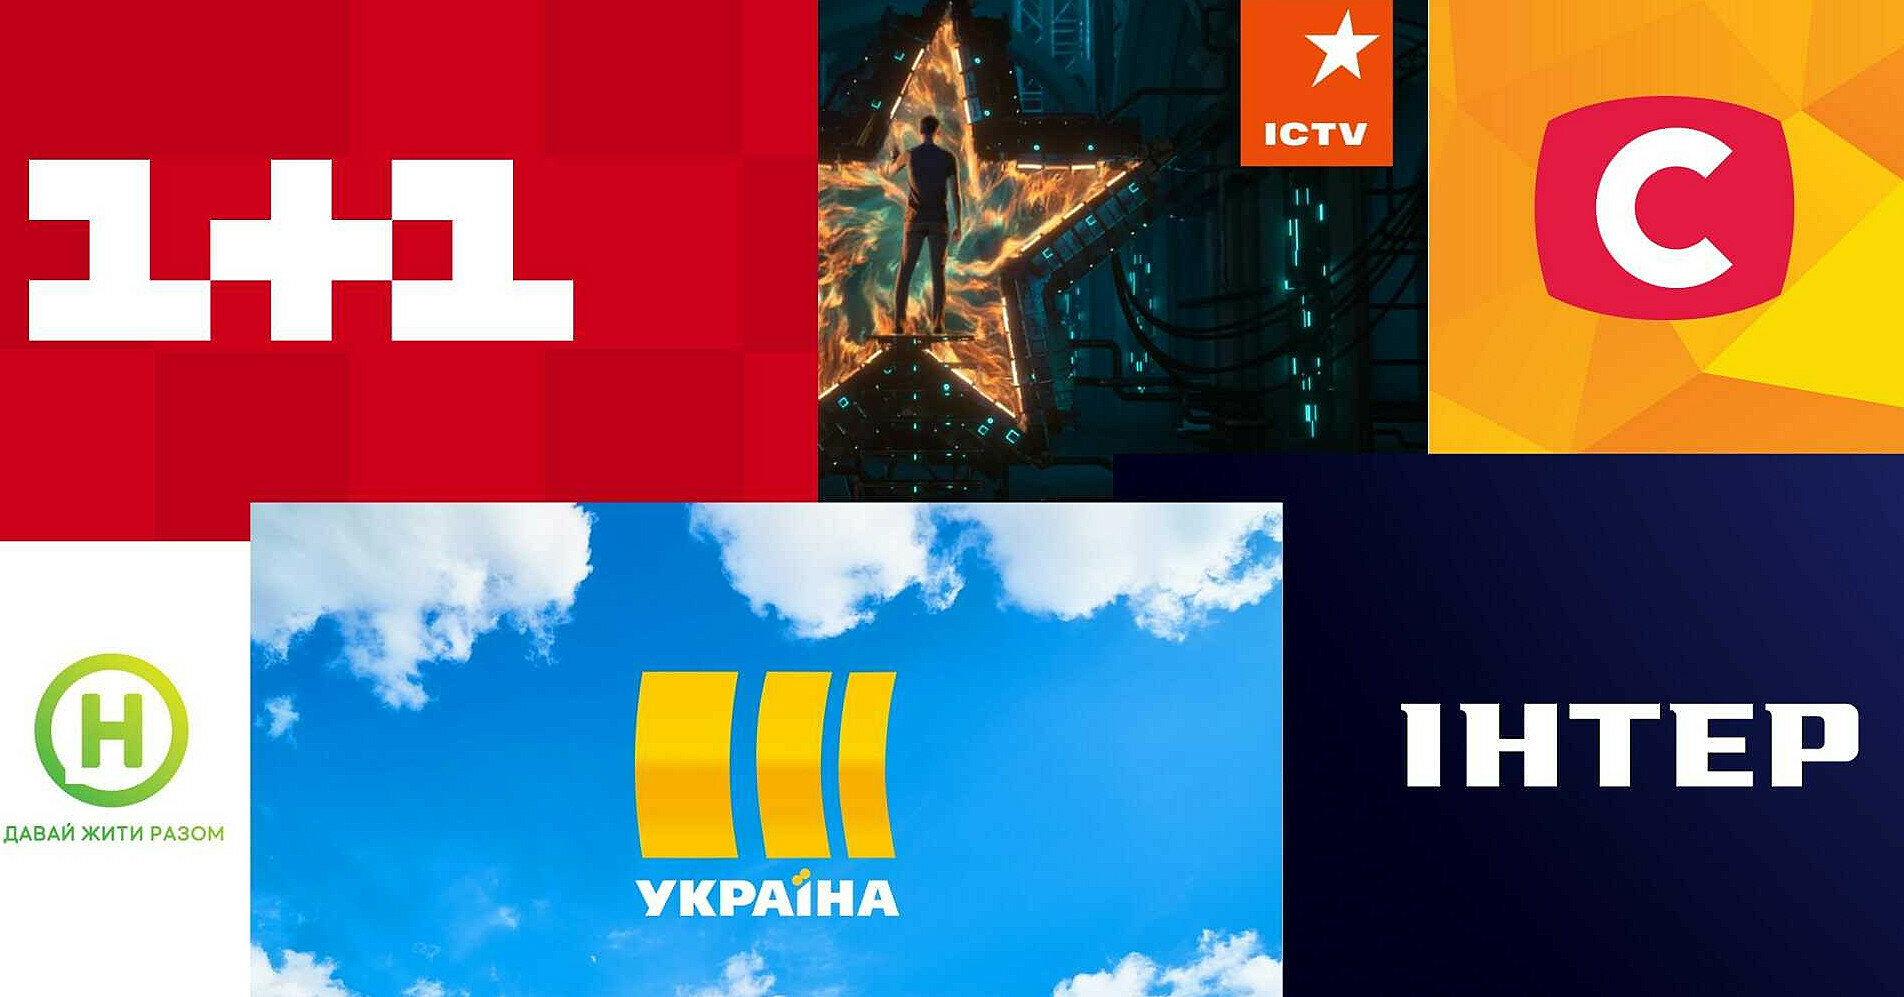 Нацсовет инициирует проверку украинских телеканалов